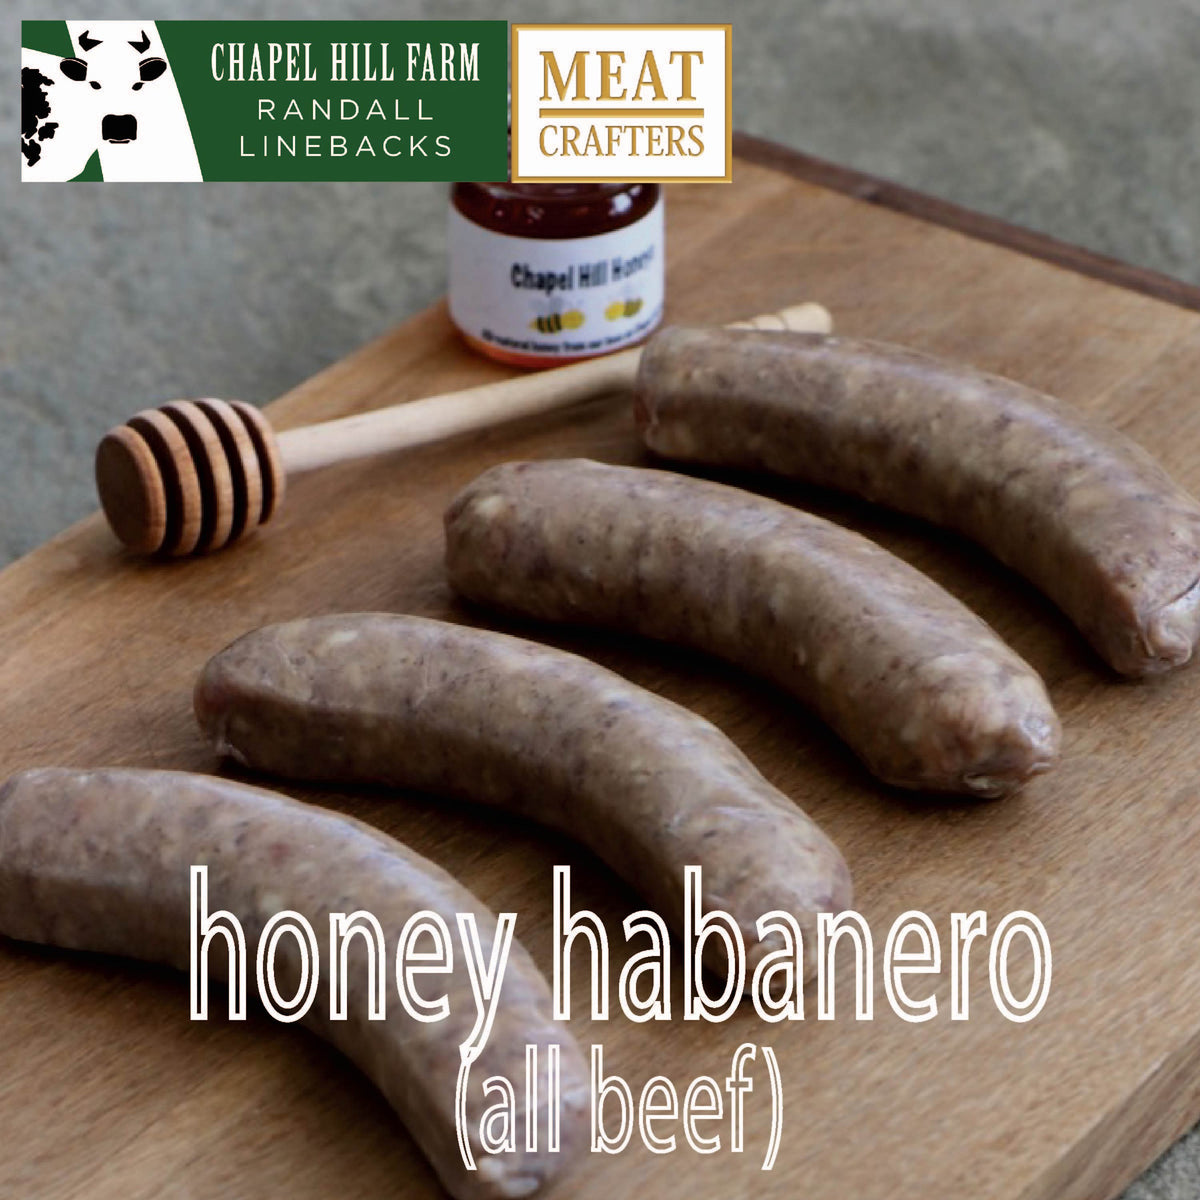 Randall Lineback Beef Sausages: Honey Habanero